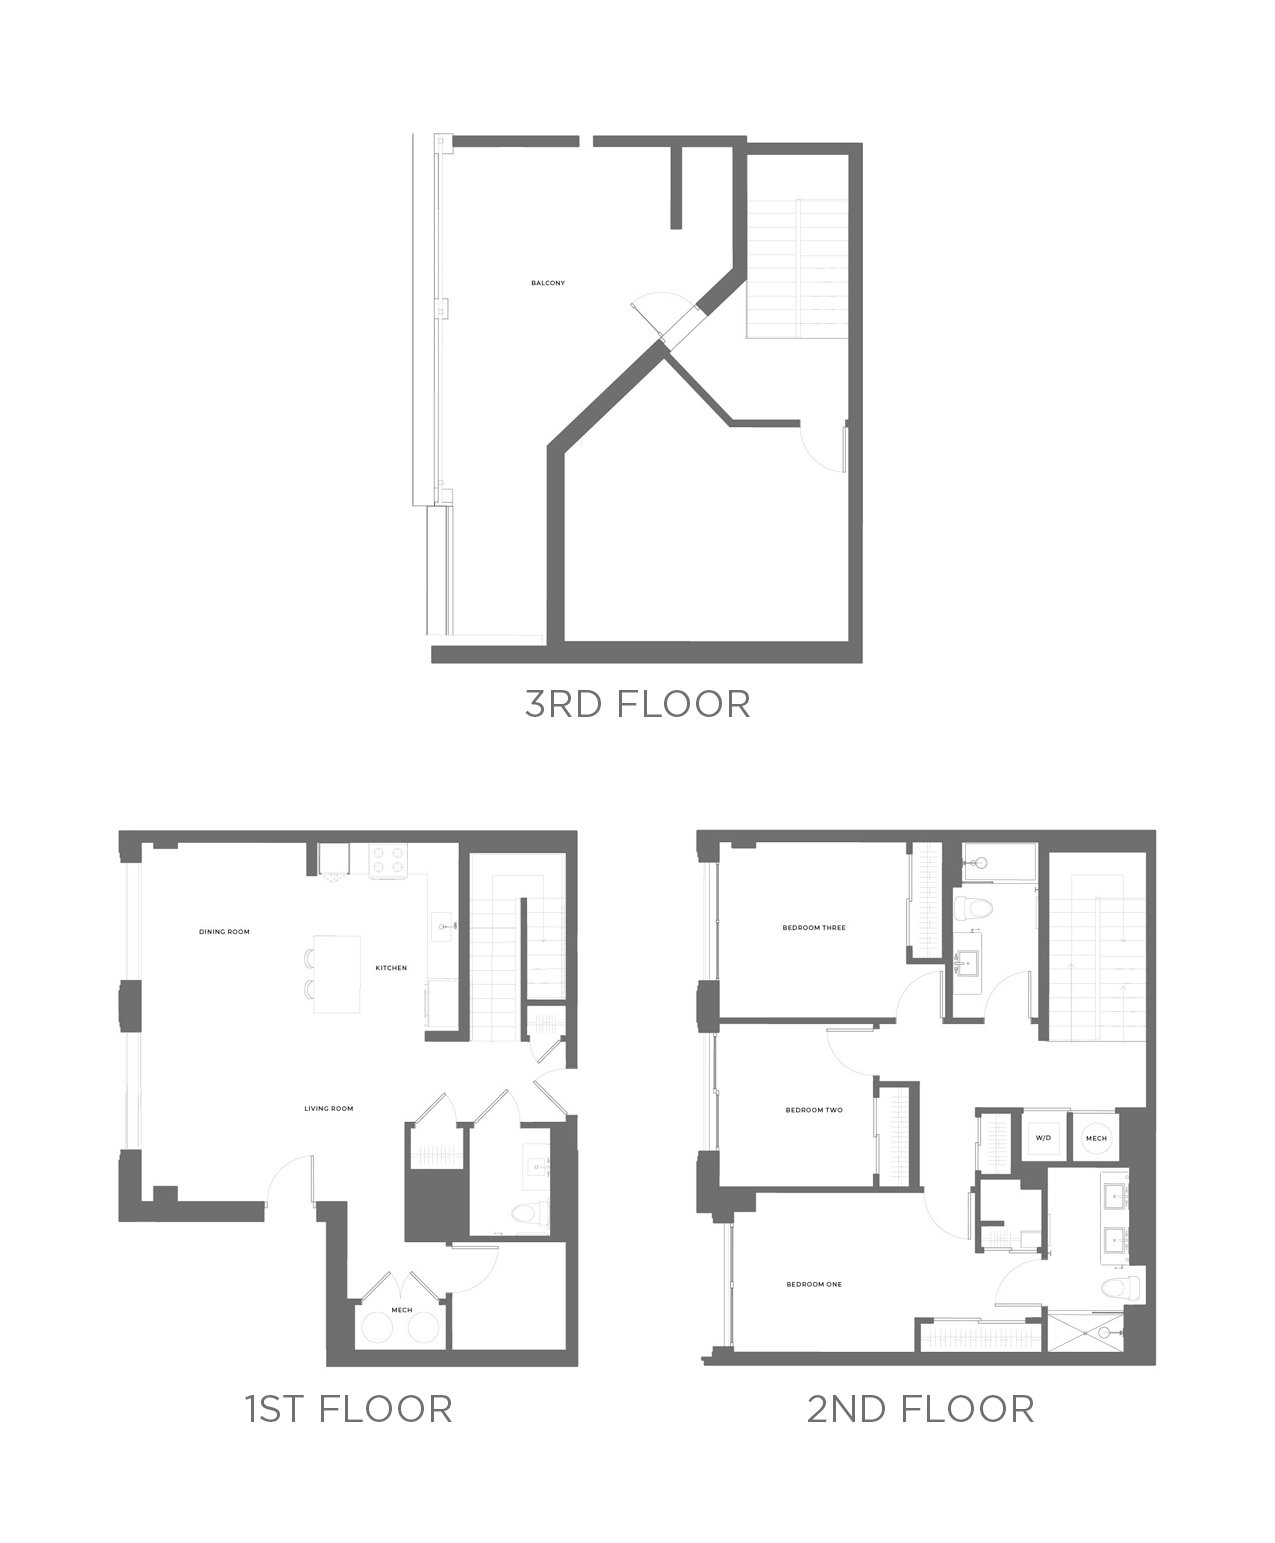 Floorplan image of apartment 